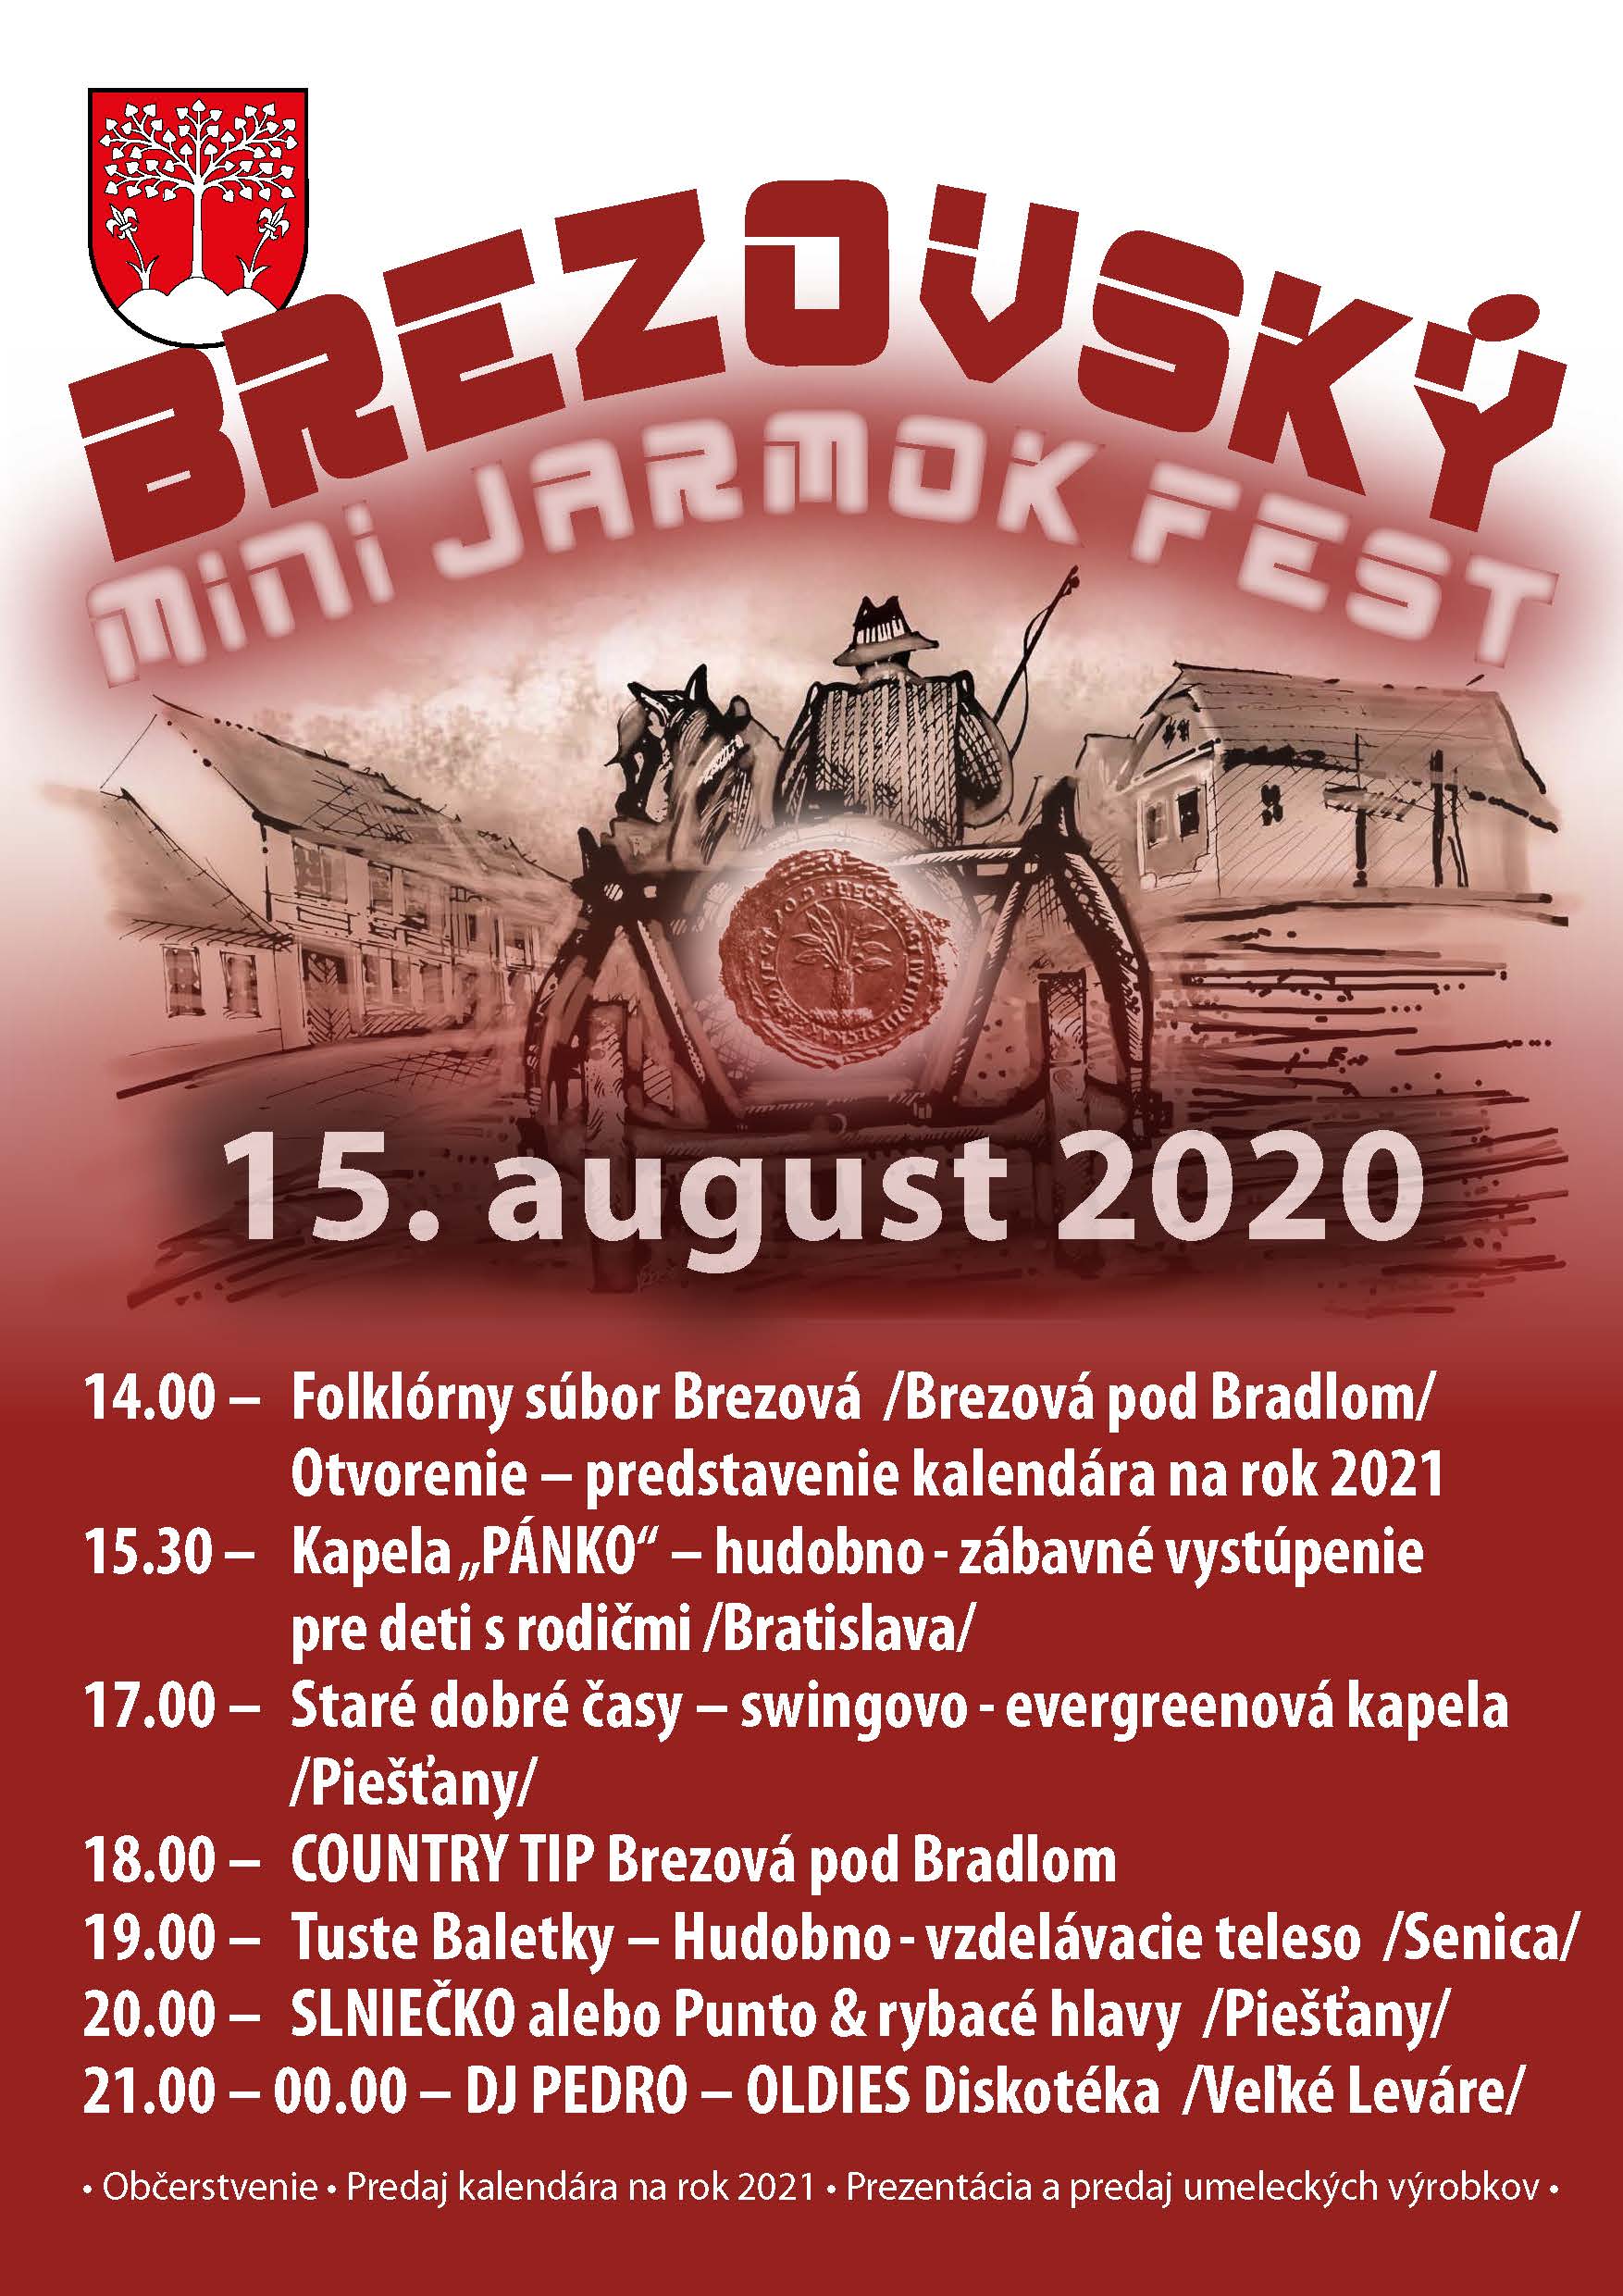 Brezovský Mini jarmok Fest